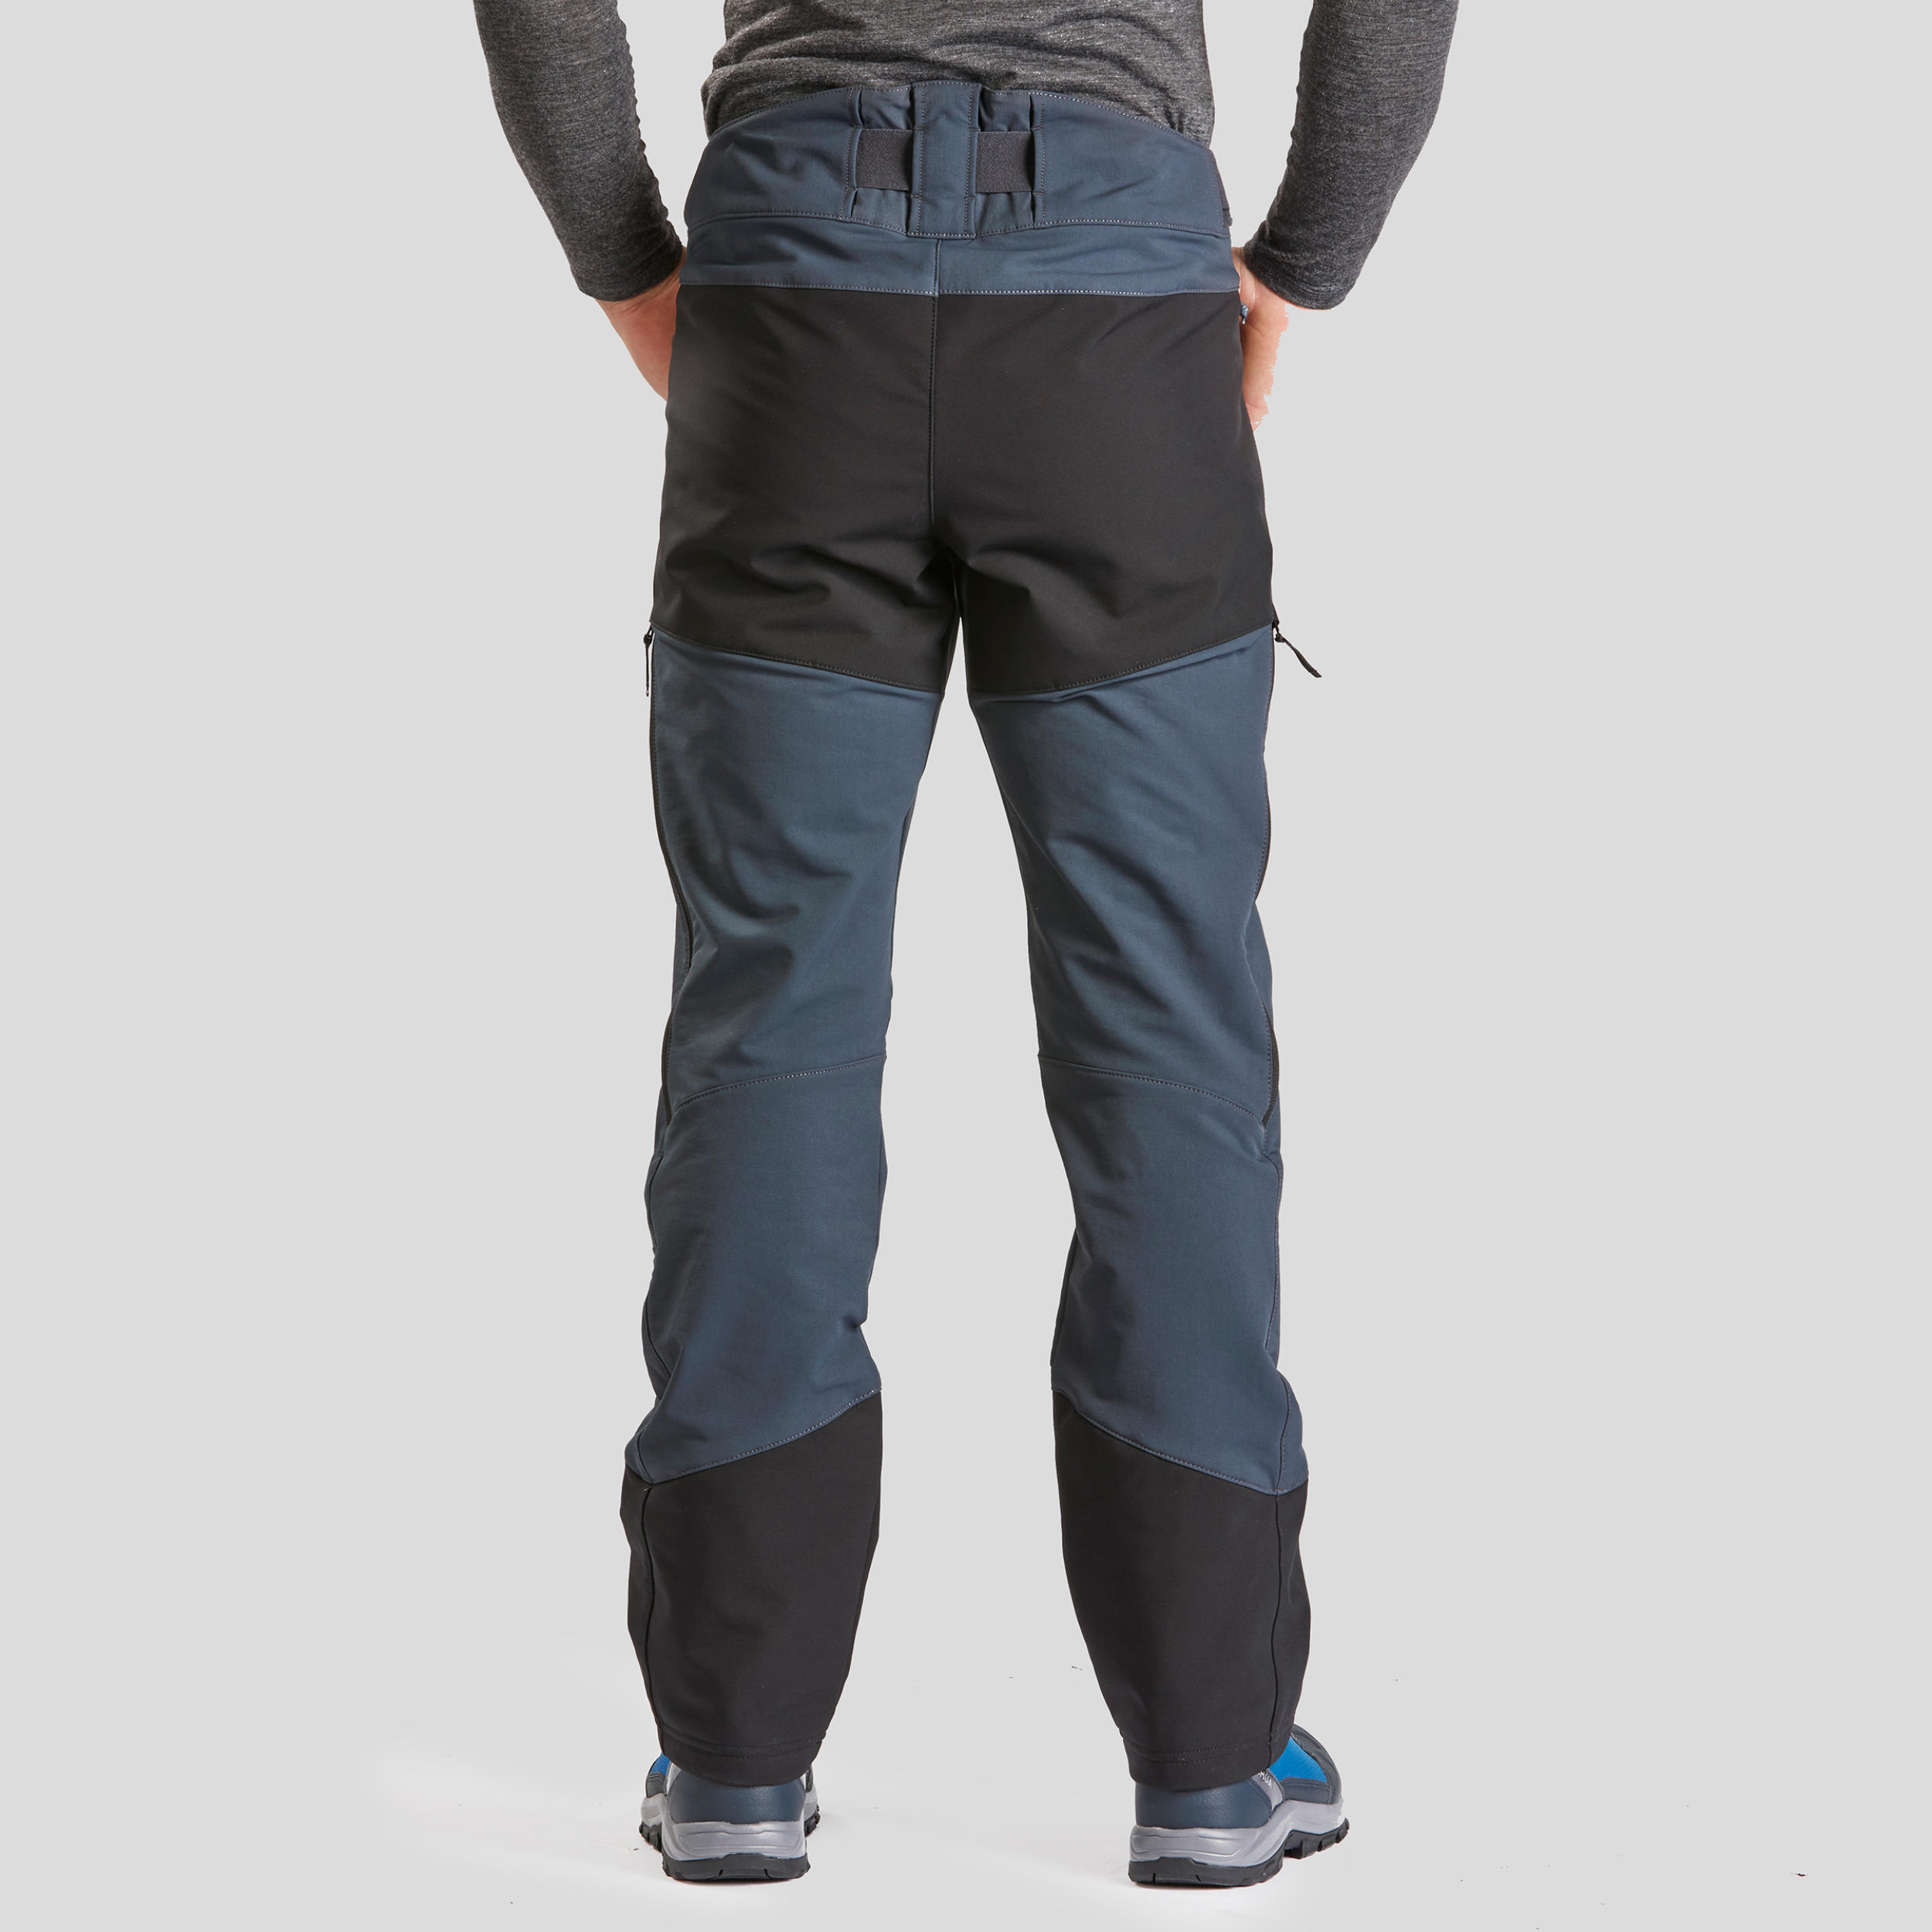 Men's Breathable Warm Pants - SH 500 Grey - Carbon grey, black - Quechua -  Decathlon